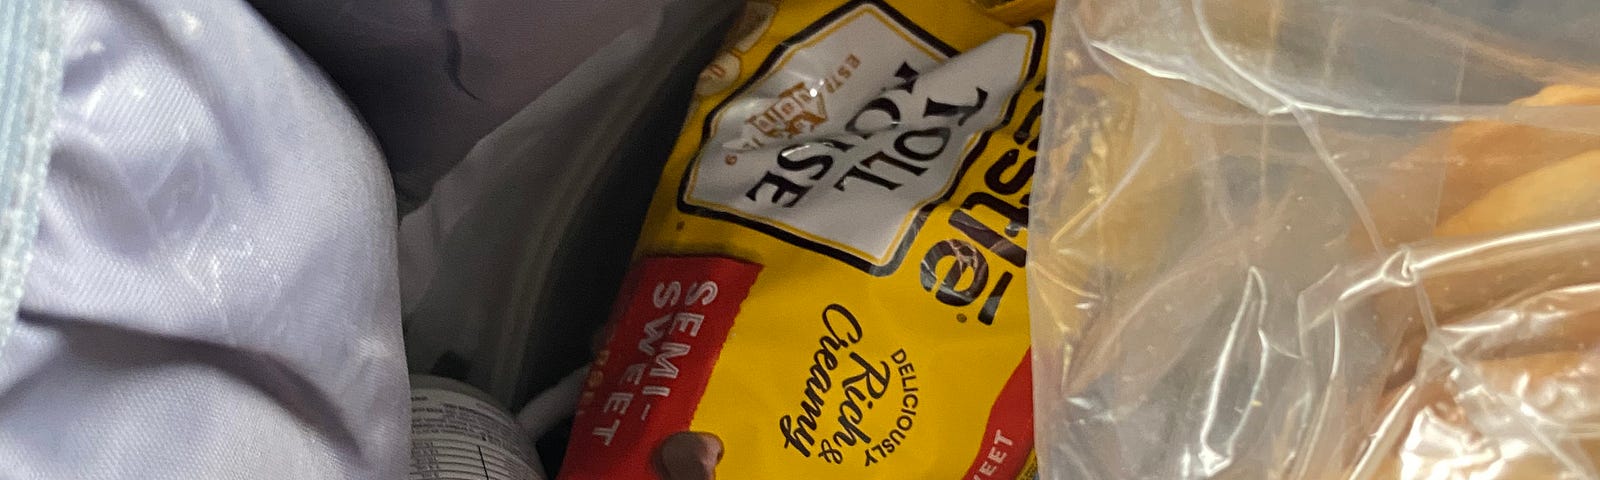 bag of chocolate chips inside a diaper bag